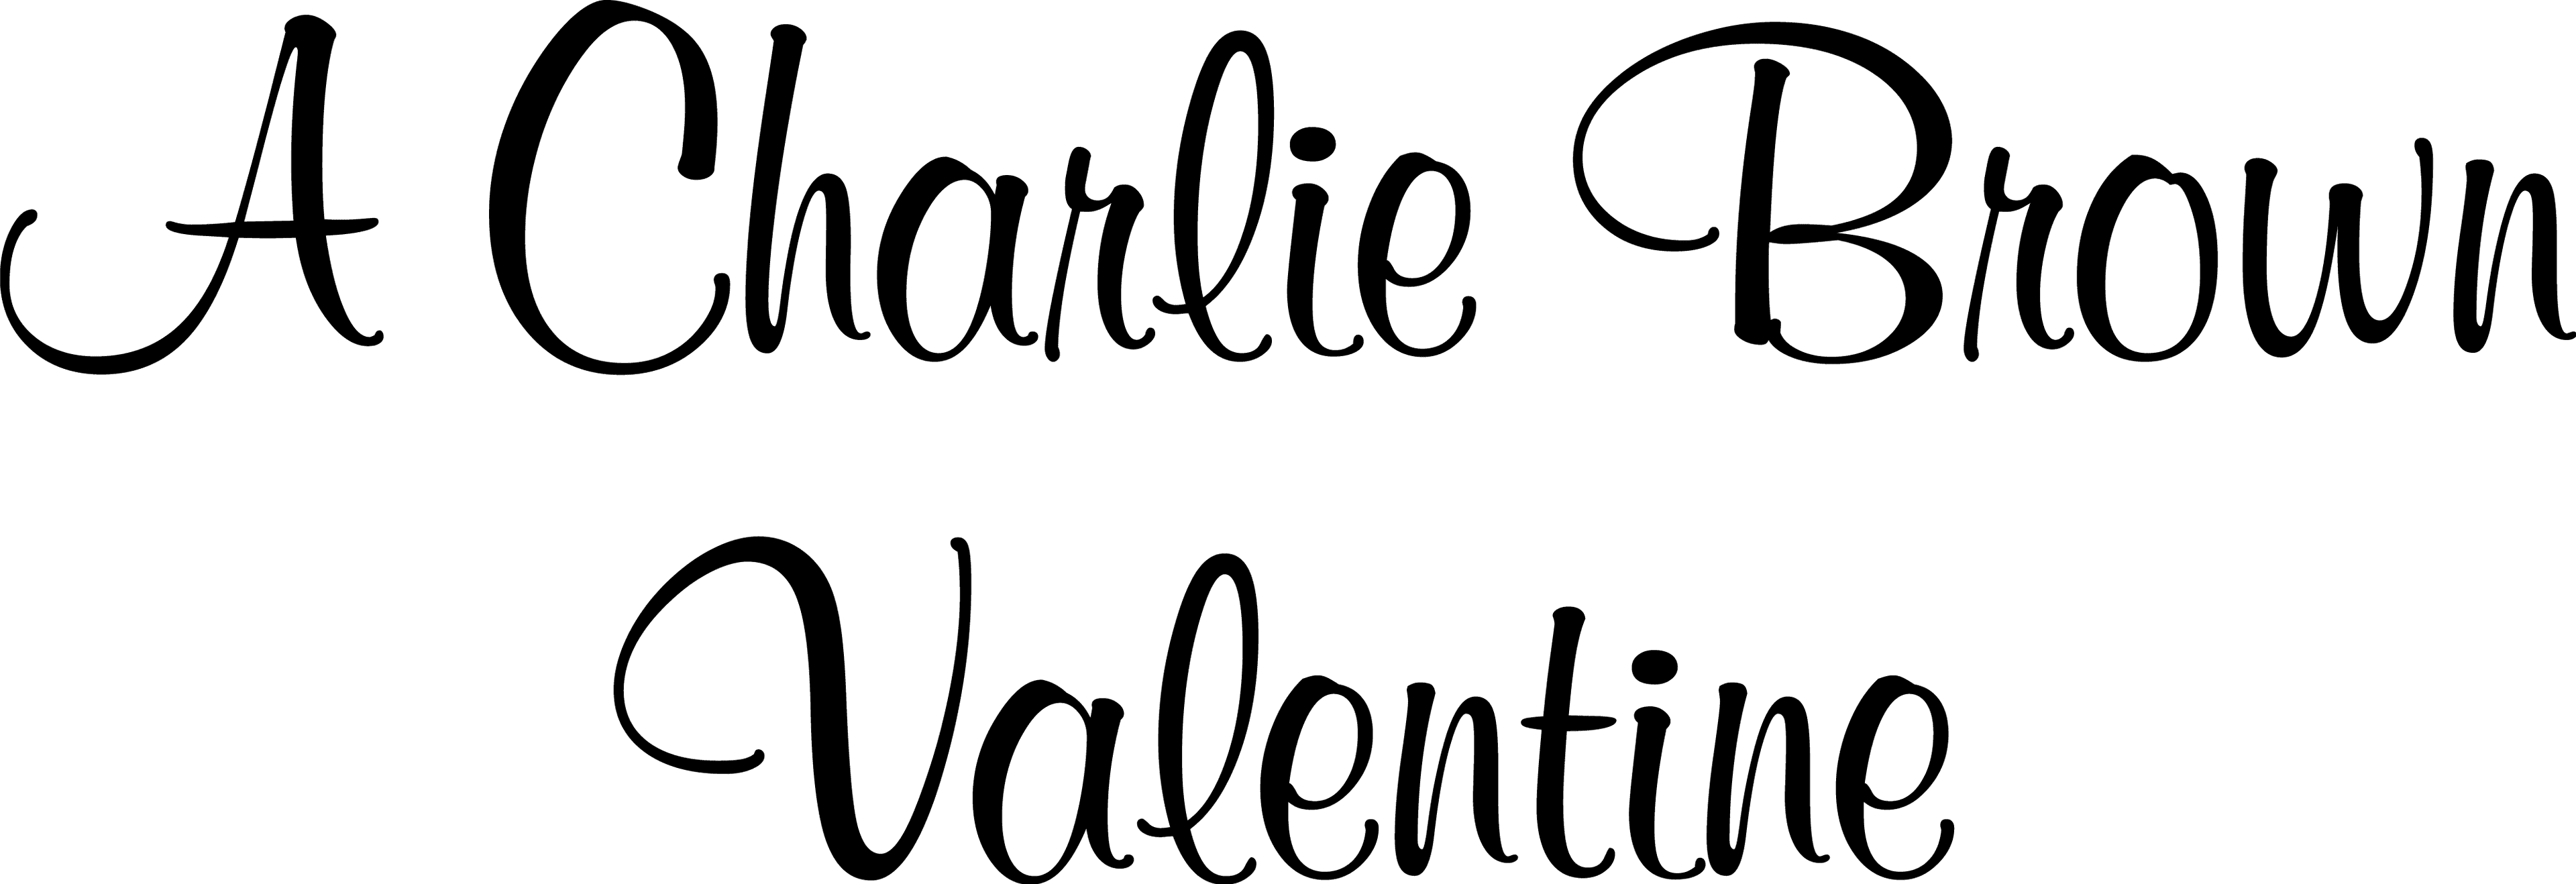 A Charlie Brown Valentine logo